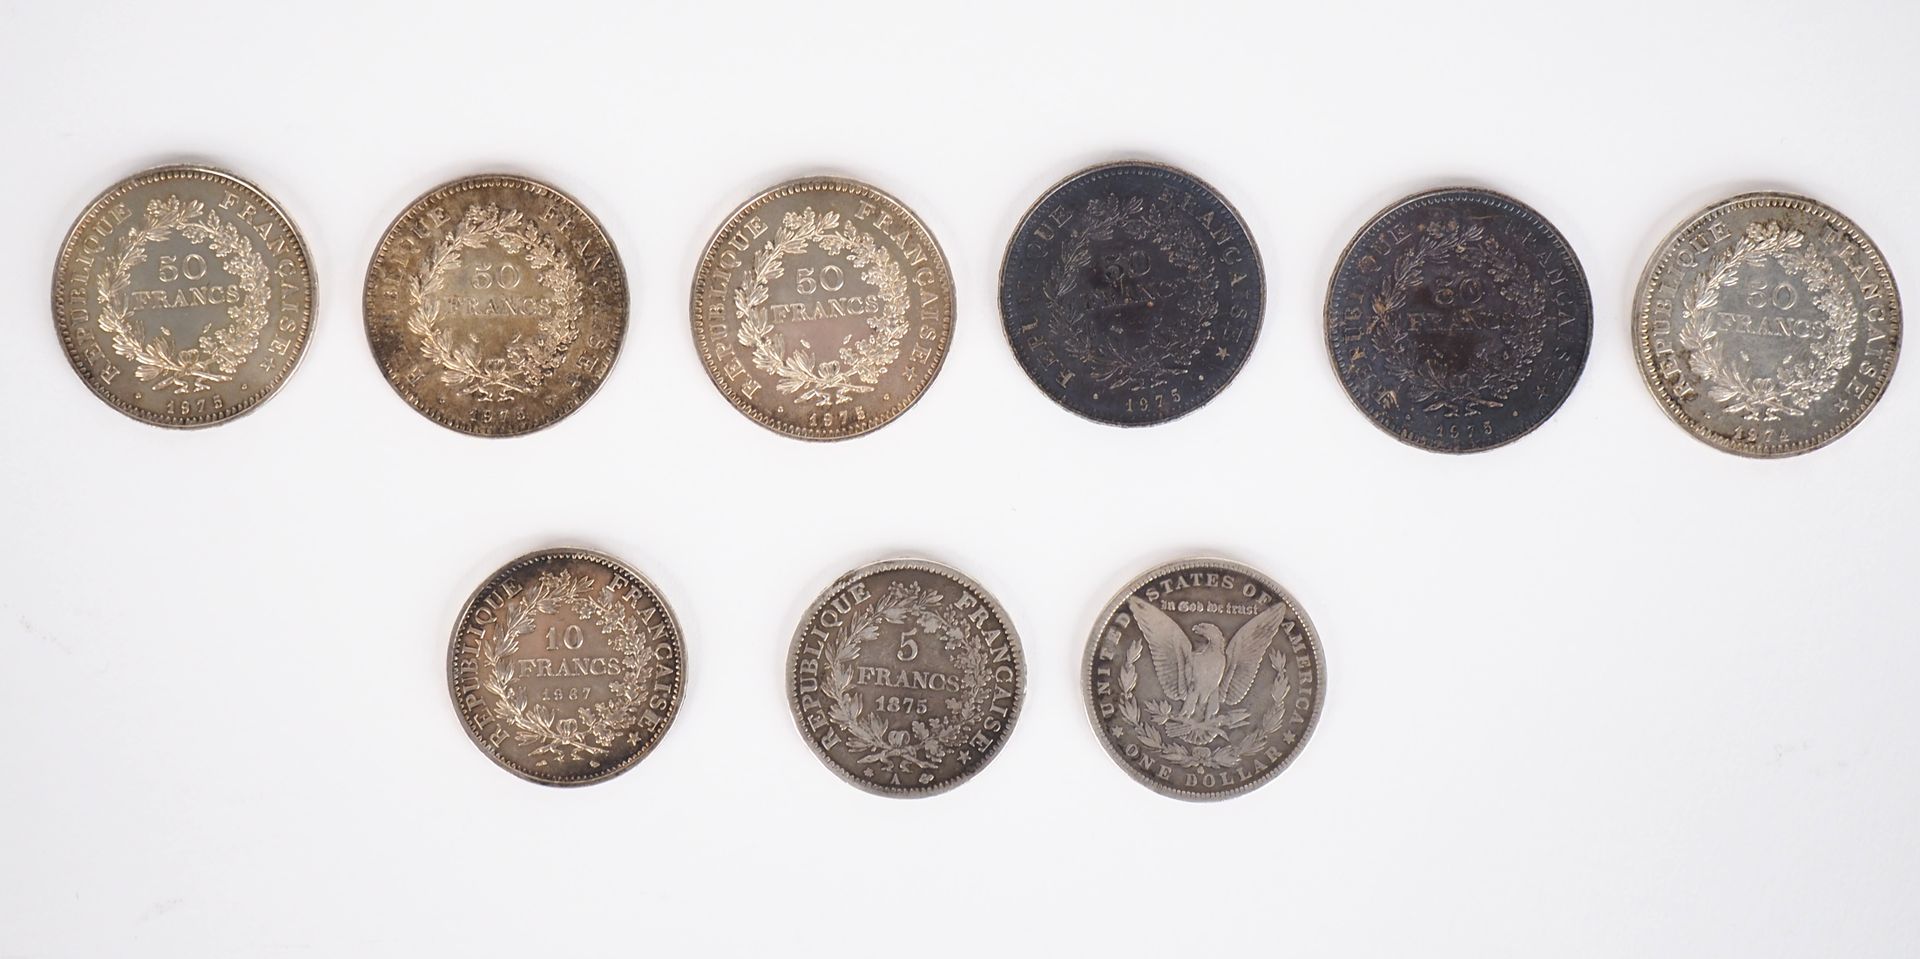 Null - 六枚50法郎银币，1974年和1975年（x5）。

- 1967年10法郎银币一枚。

- 5法郎银币一枚，1875年

- 一枚1美元银币，1&hellip;